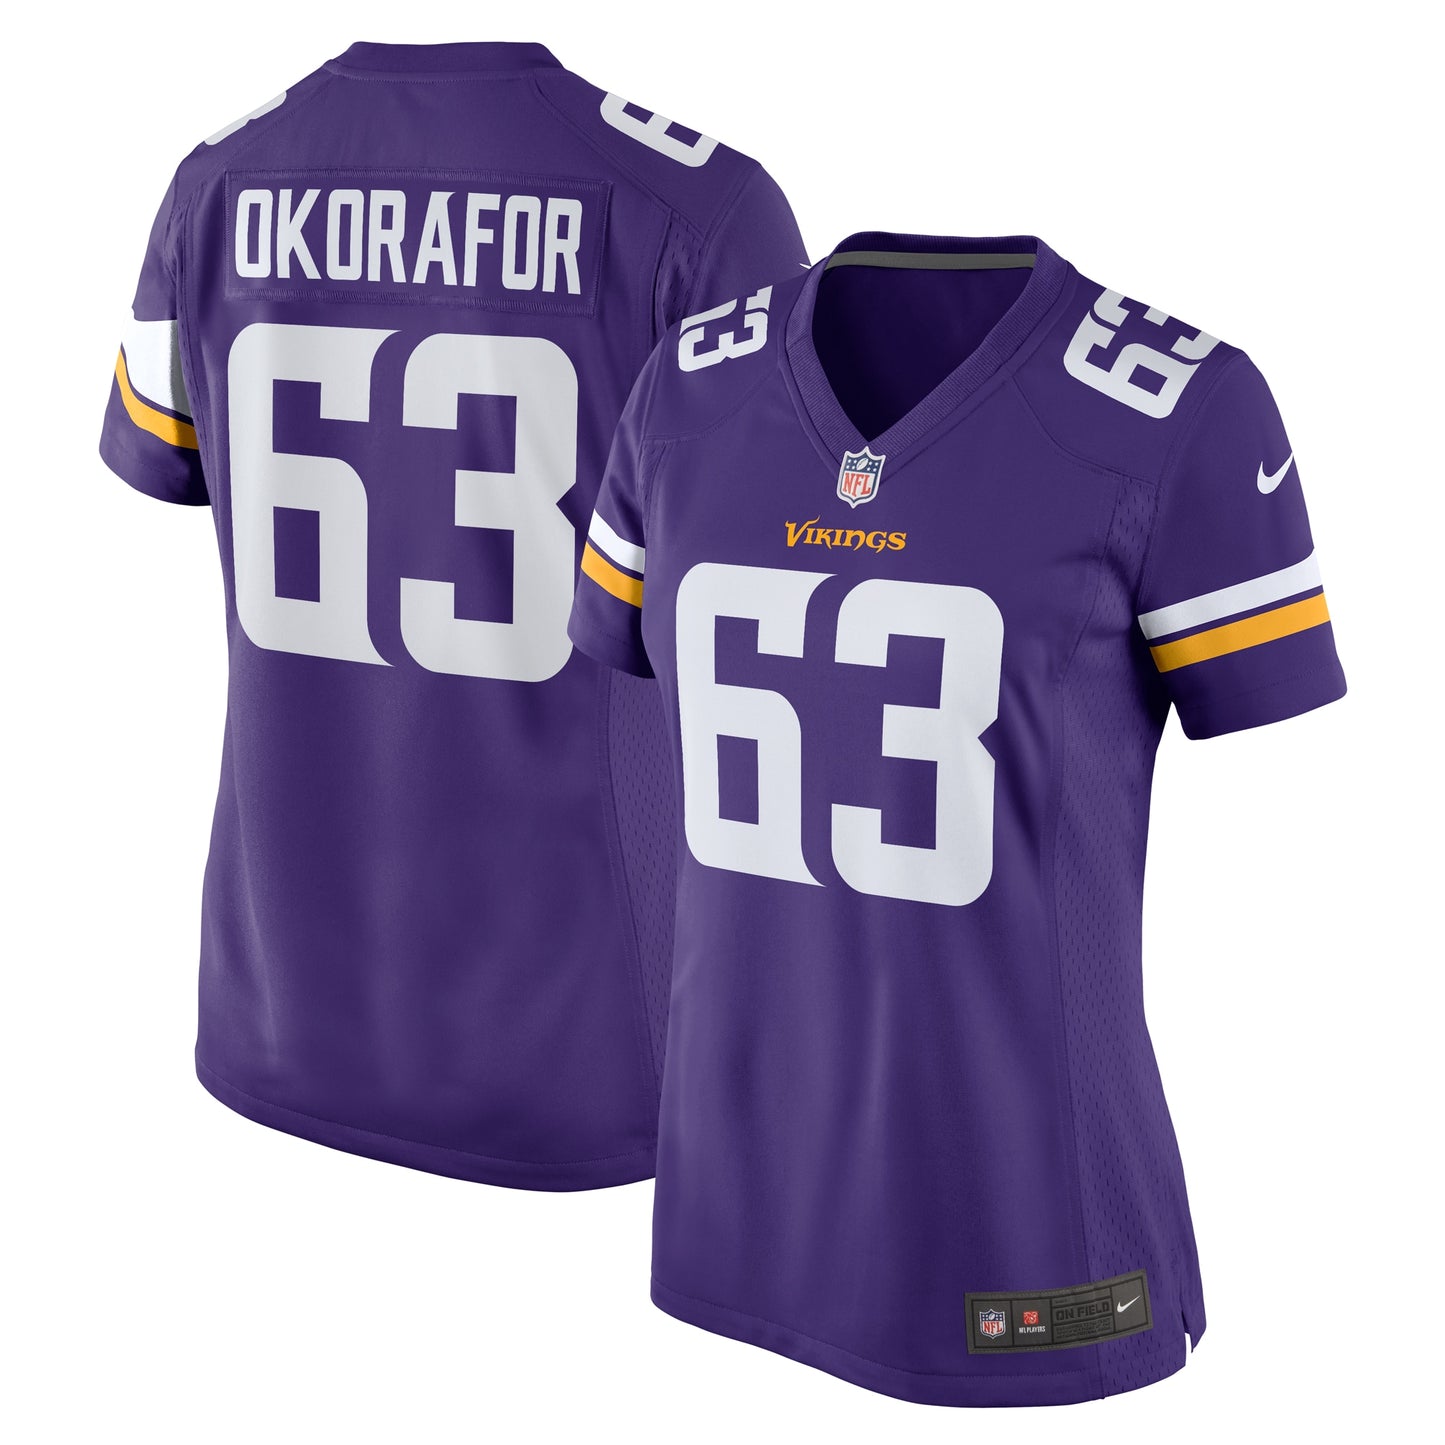 Chim Okorafor Minnesota Vikings Nike Women's Team Game Jersey - Purple